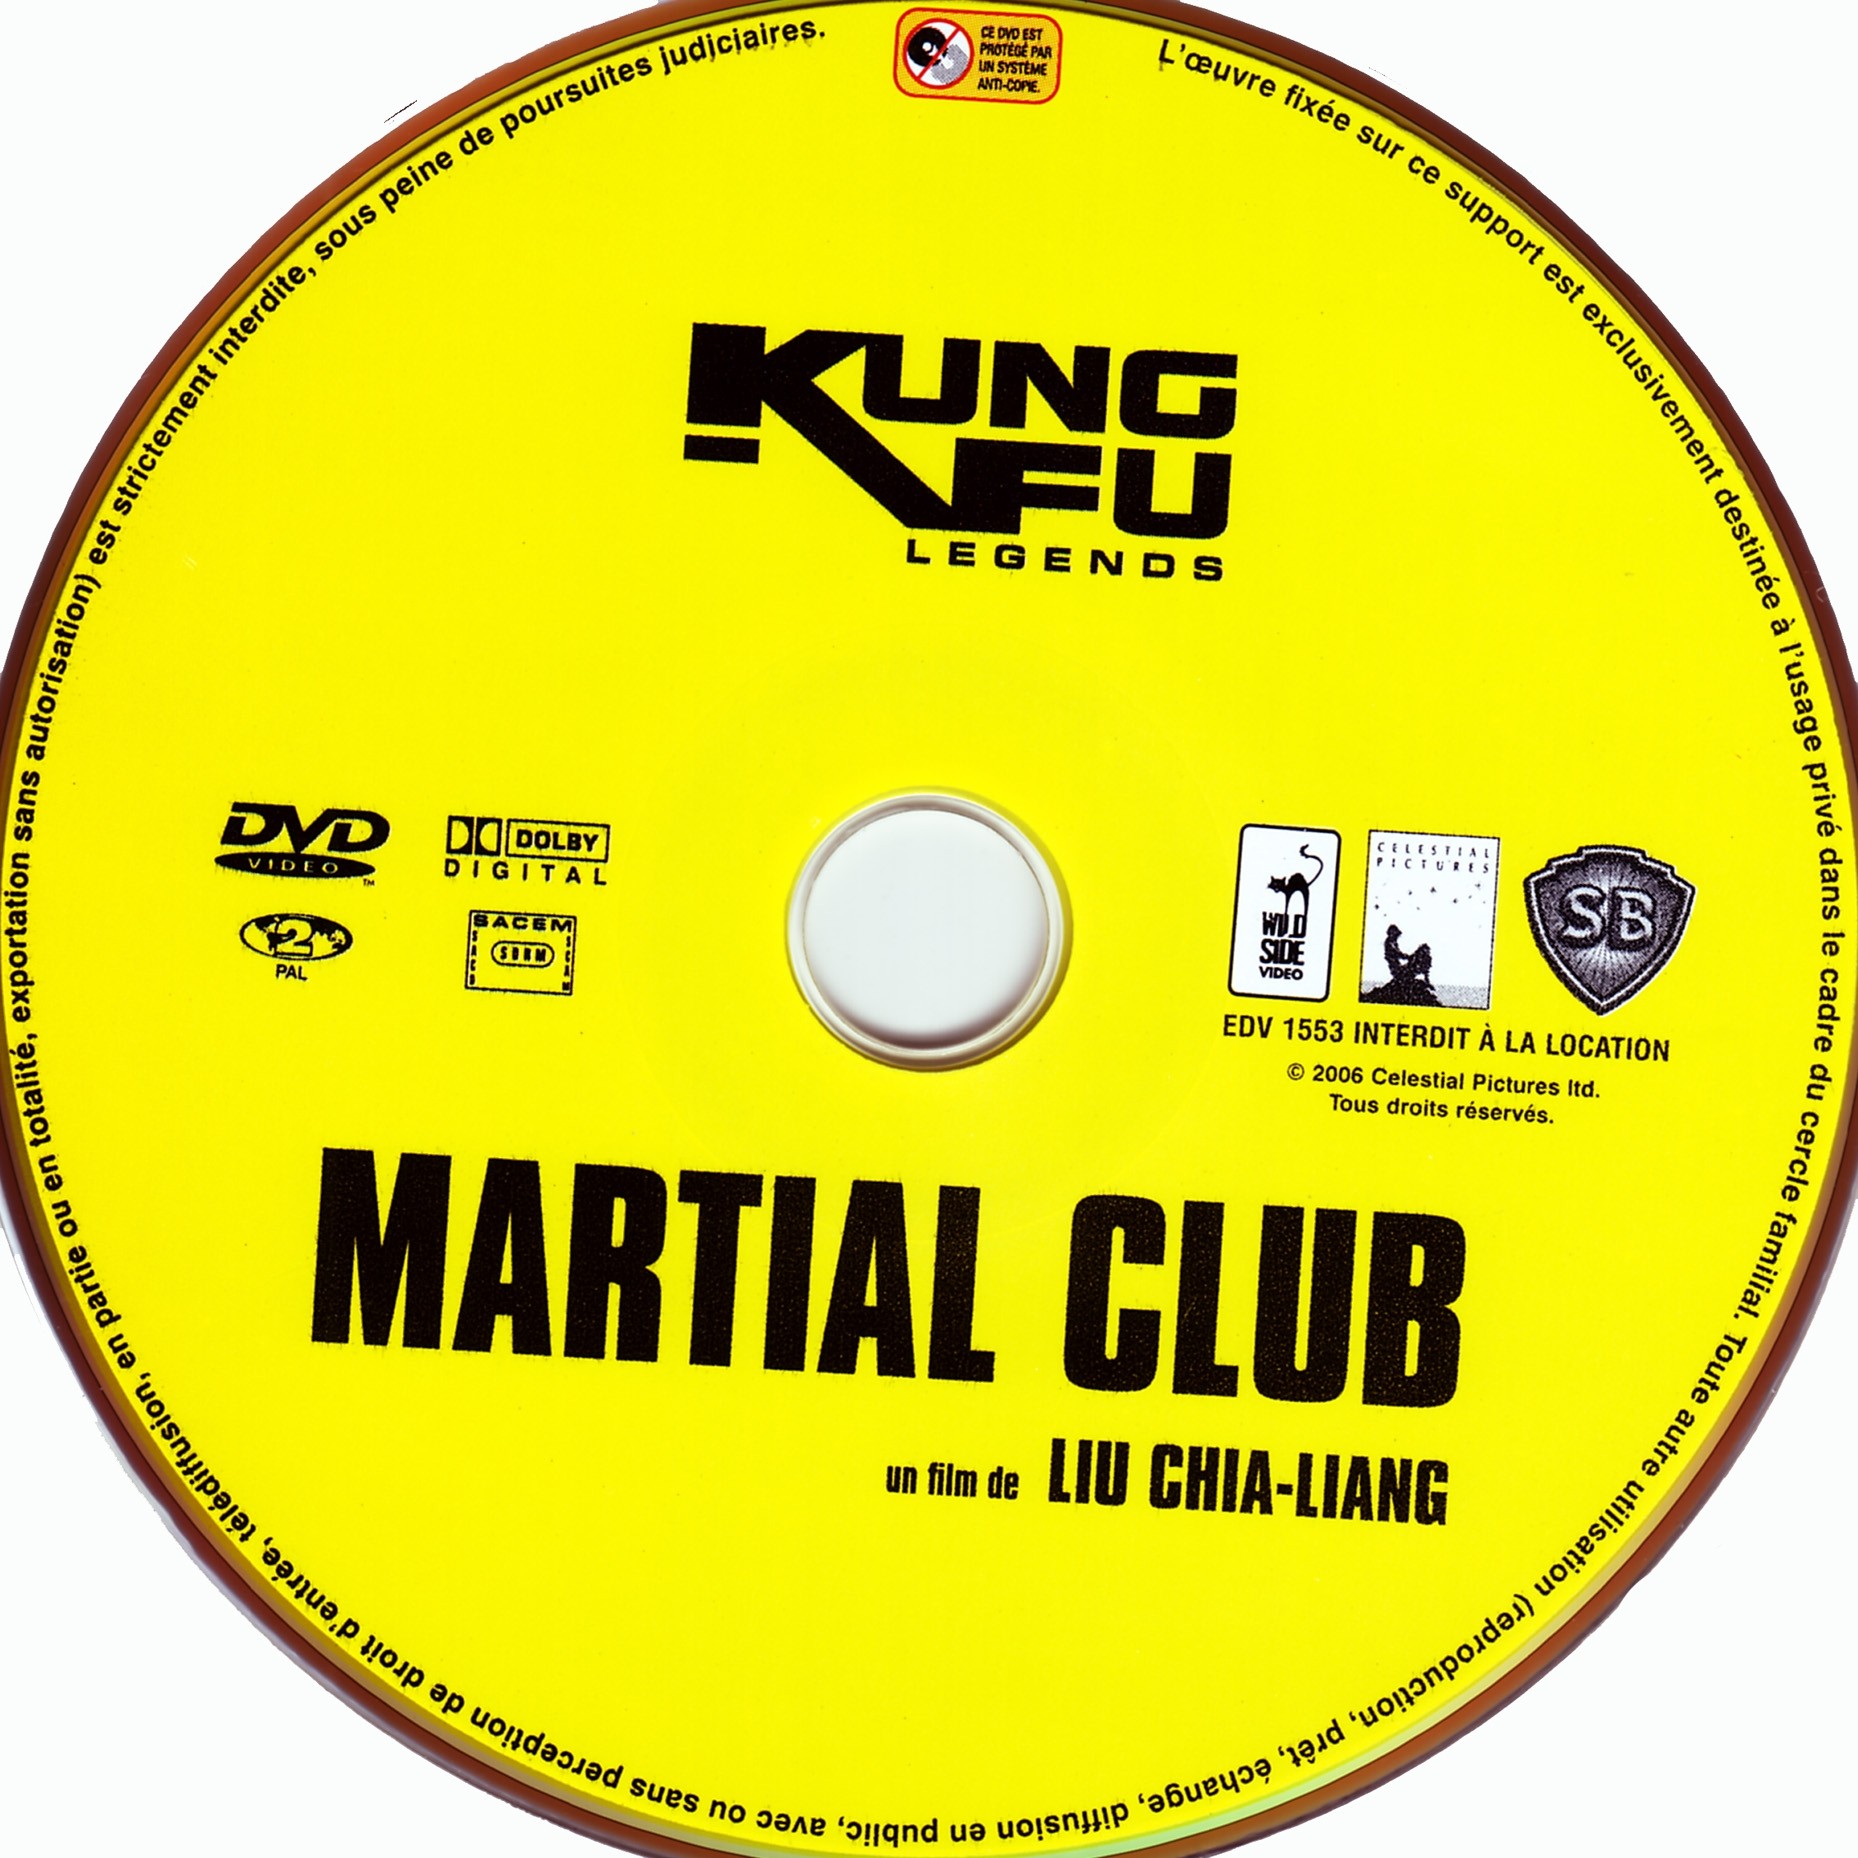 Martial club